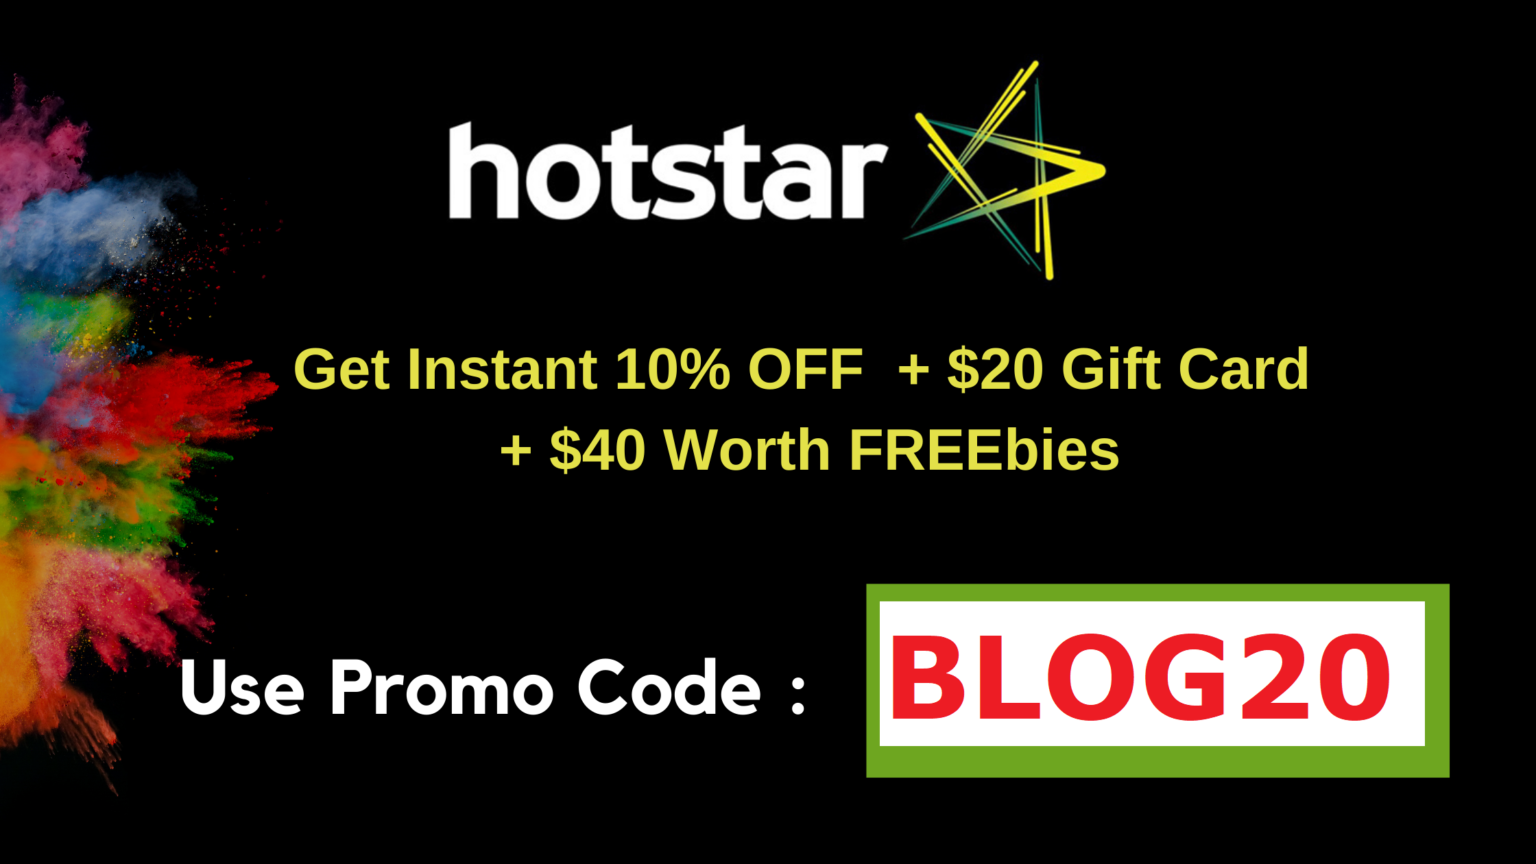 hotstar-5-off-40-gift-card-hotstar-promo-code-blog20